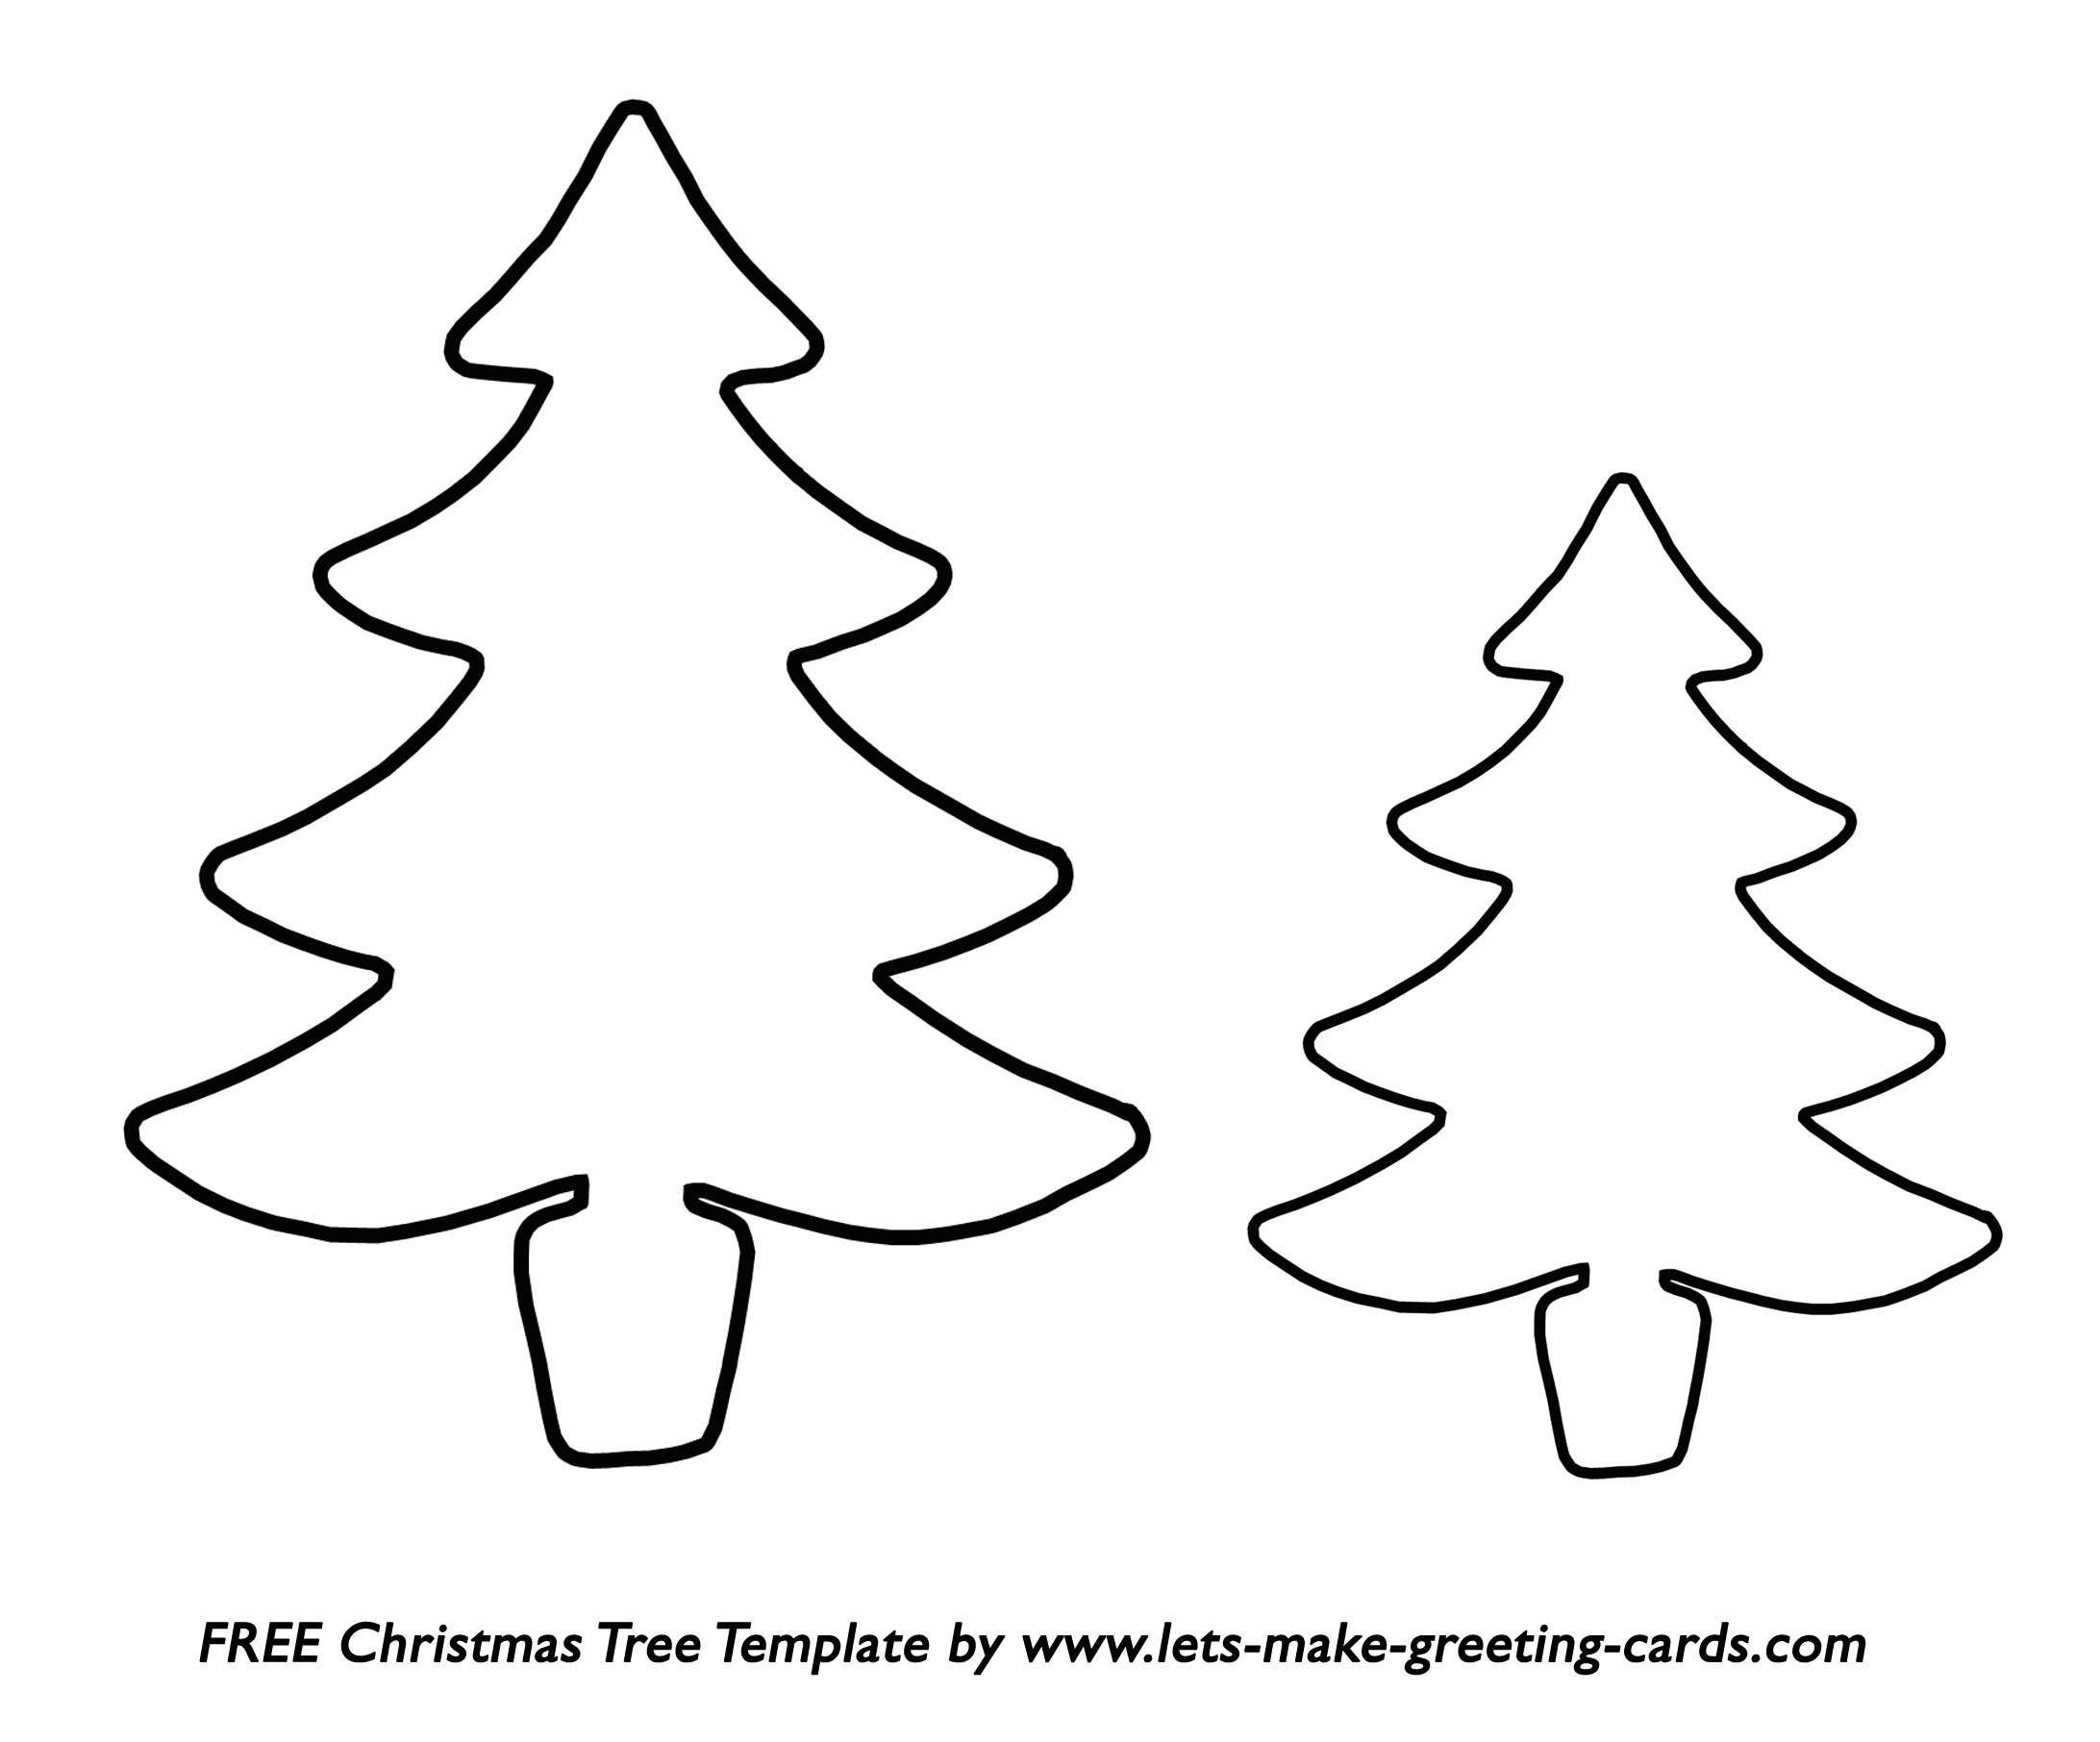 Free Christmas Tree Template. Free Christmas Card Ideas. - Free Printable Christmas Tree Template